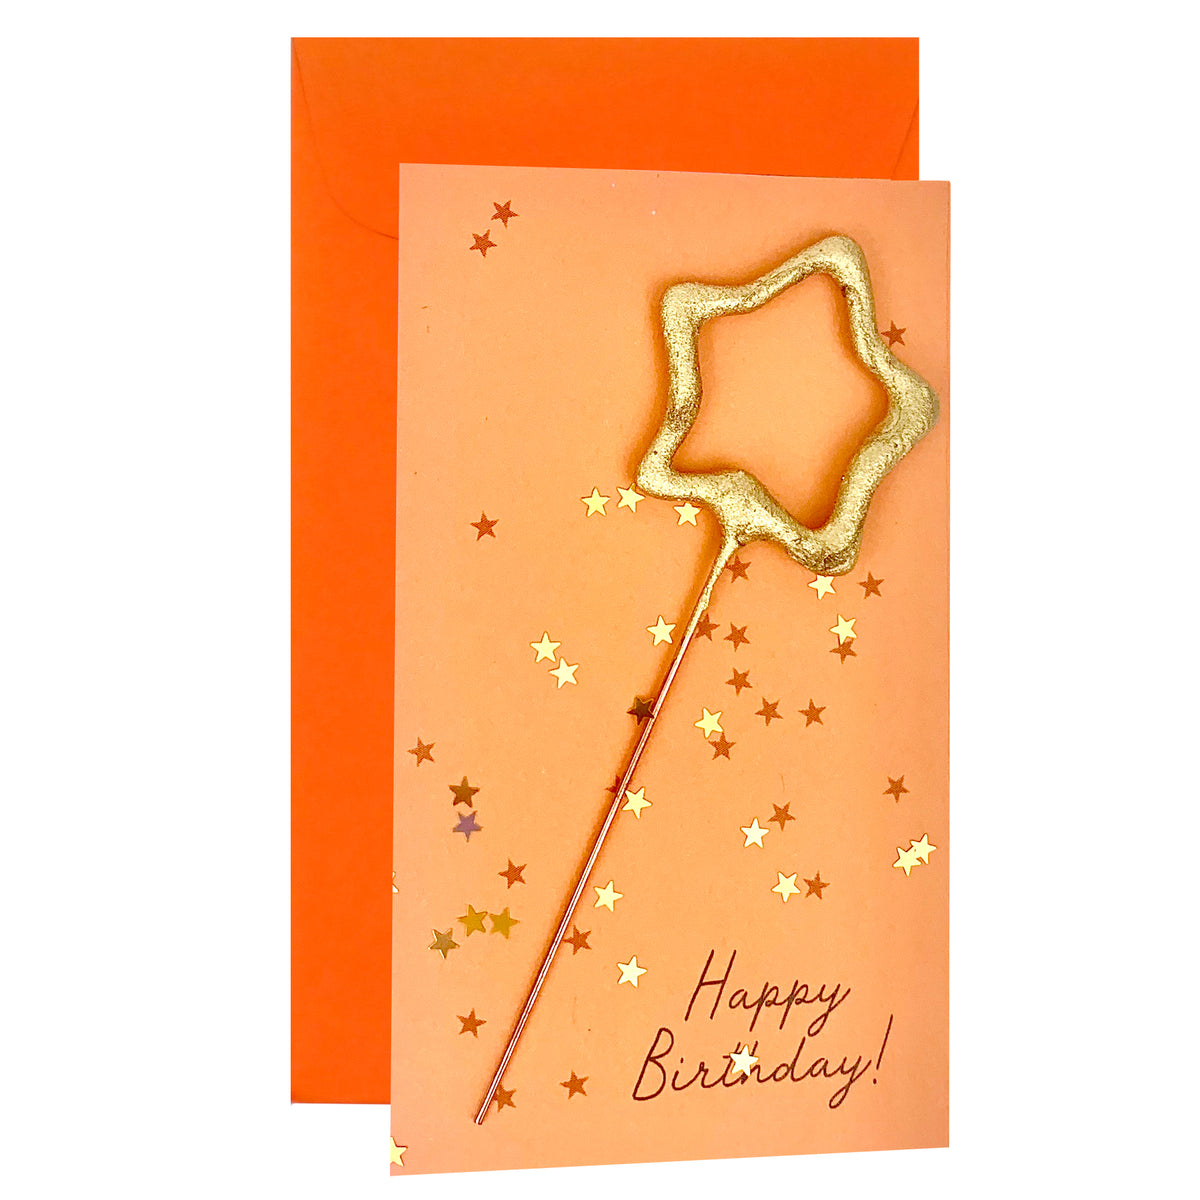 Confetti Sparkler Cards Happy Birthday!